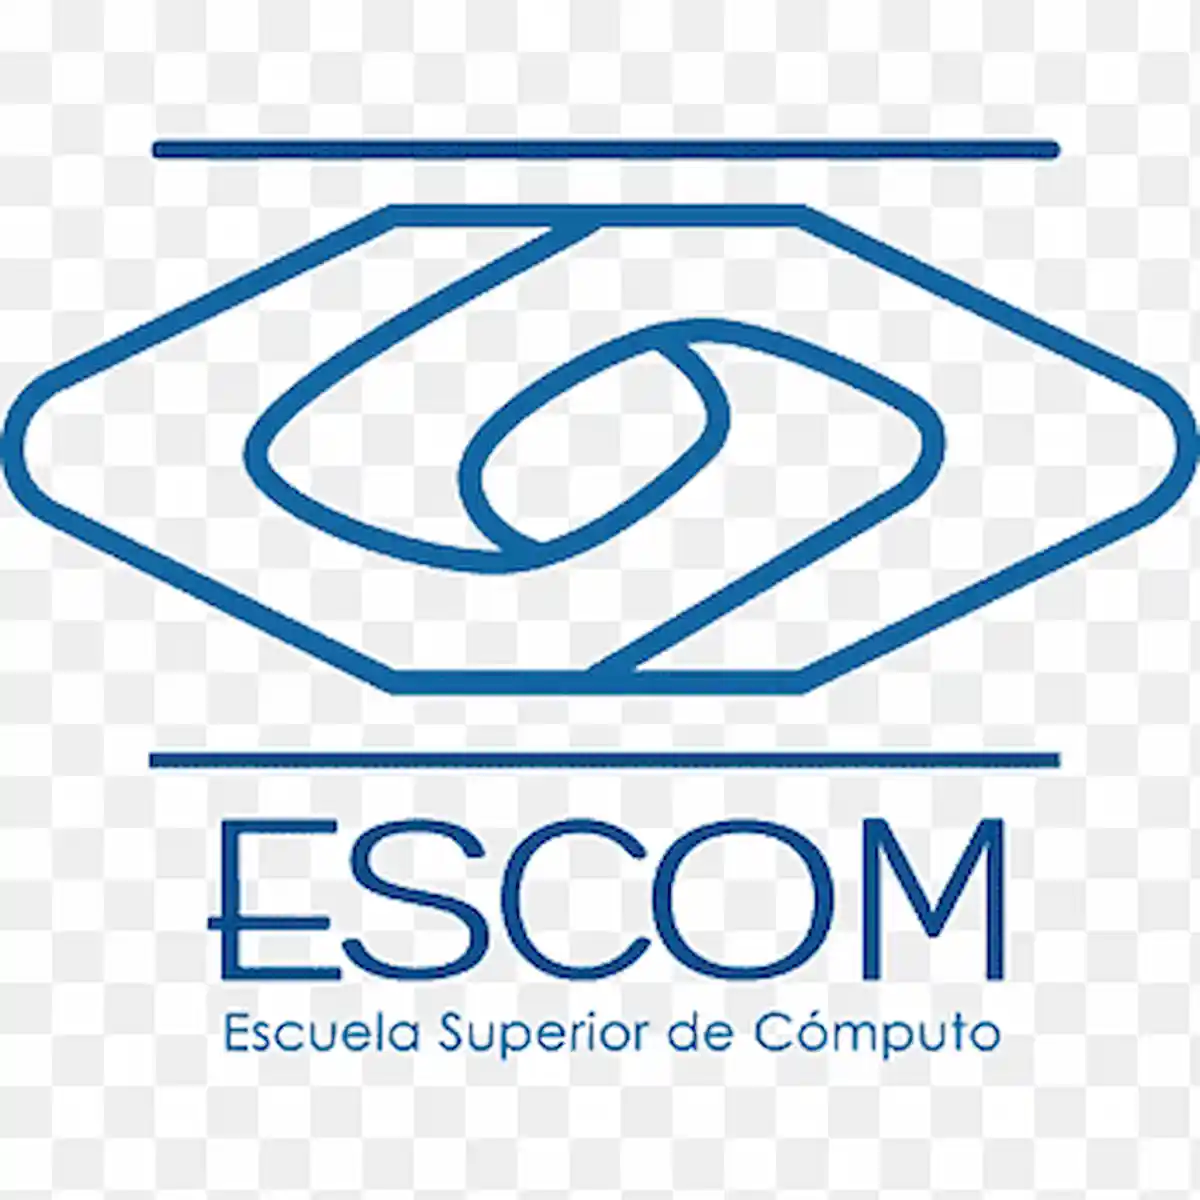 ESCOM - Escuela Superior de Cómputo - IPN